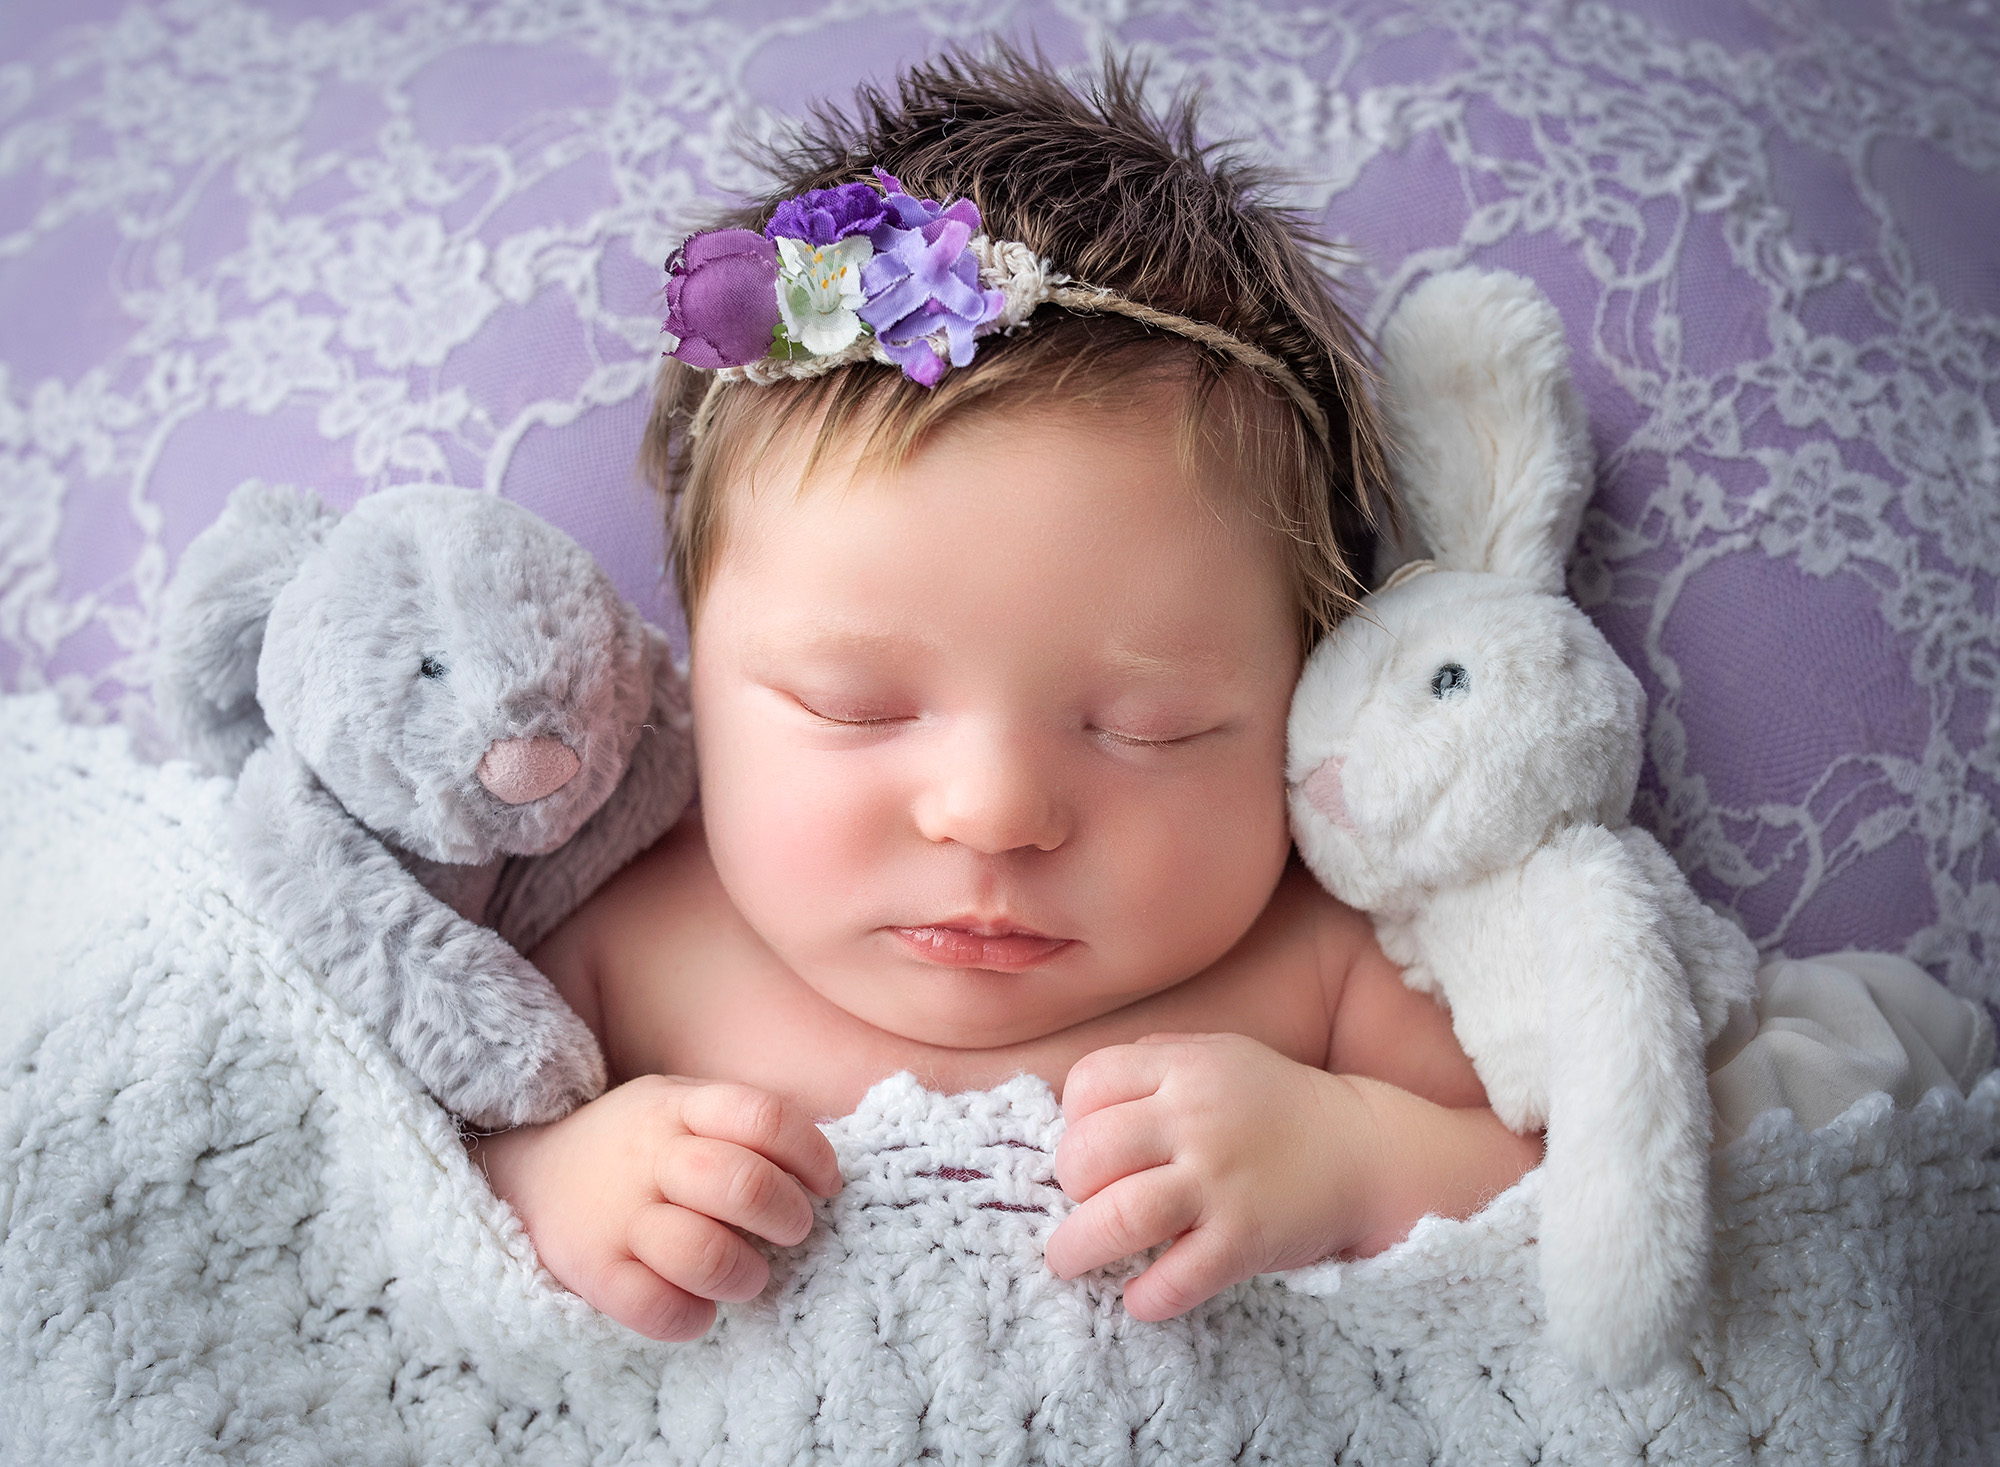 newborn baby girl asleep under blanket wearing purple headband with stuffed bunnies on each side of her